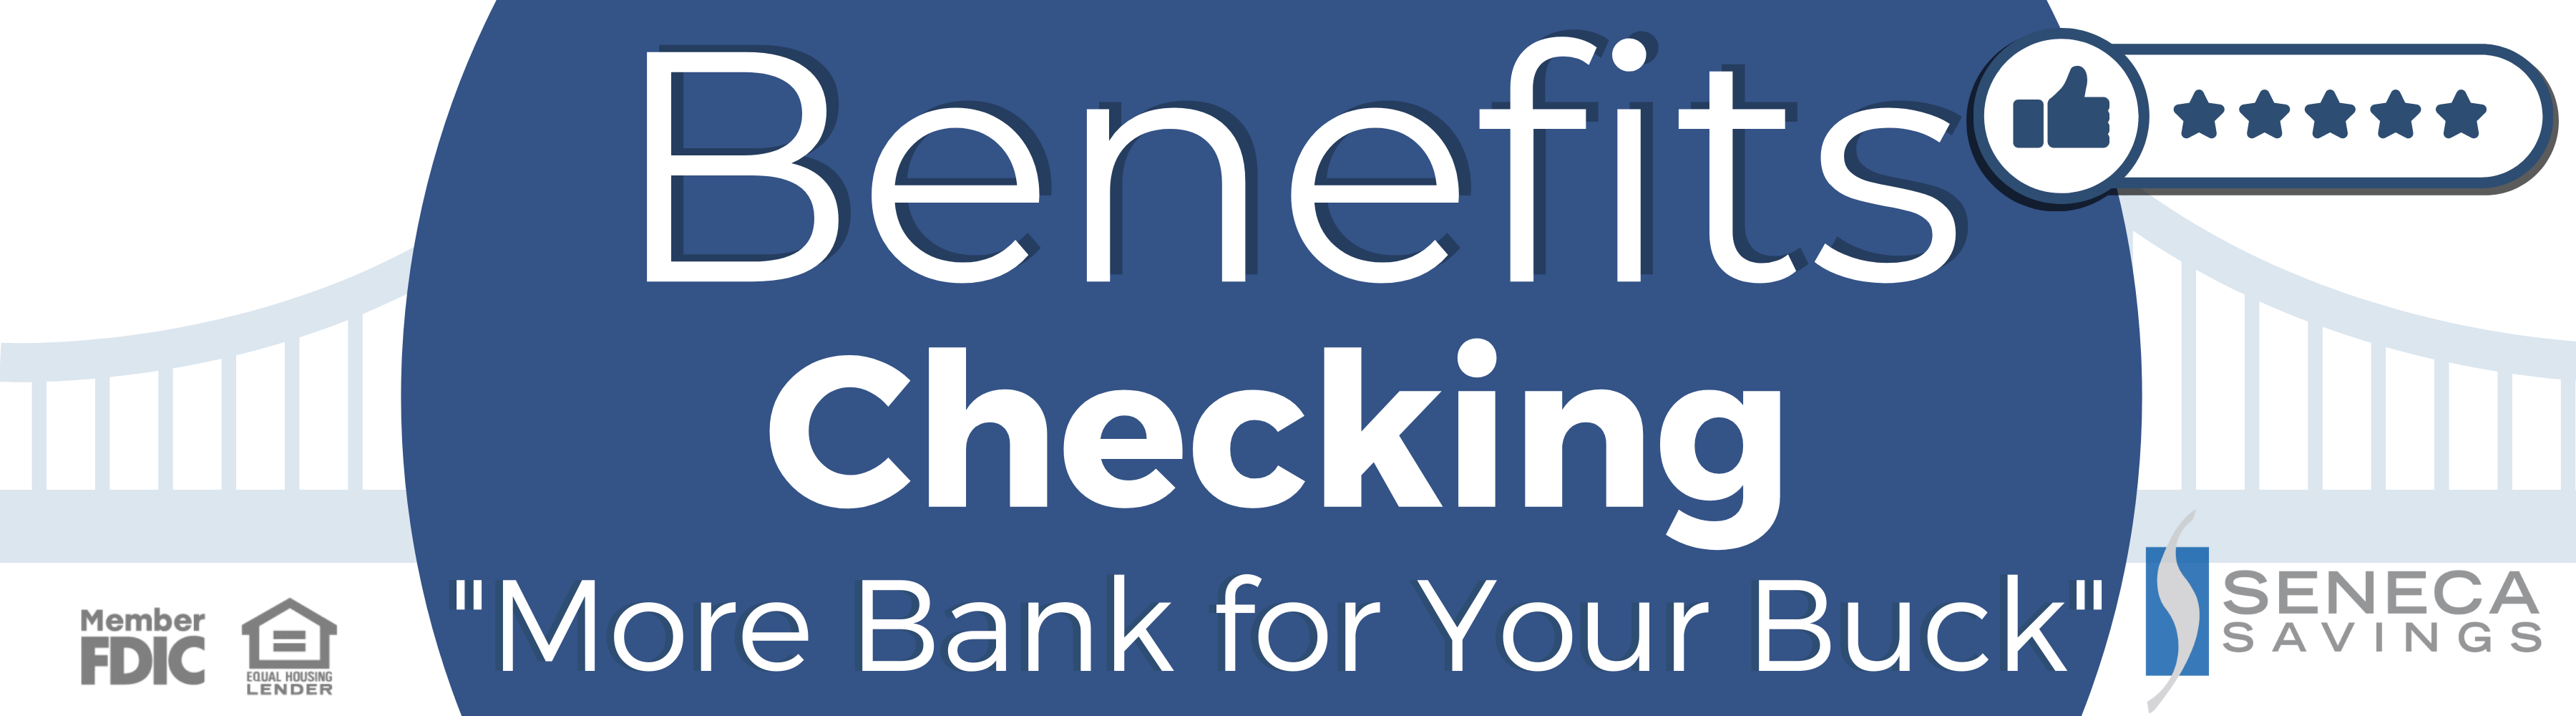 benefits checking account with seneca savings